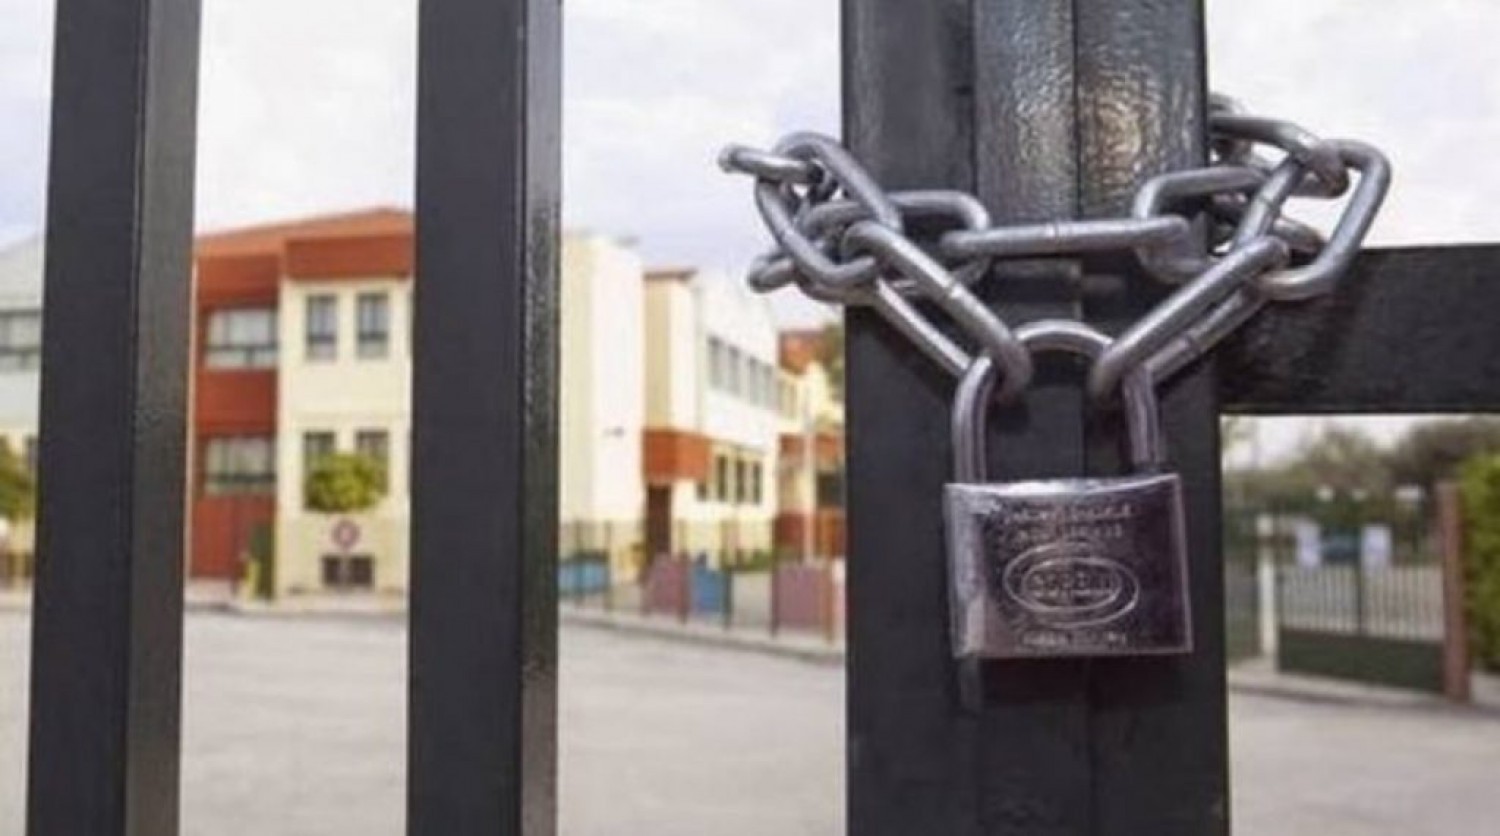 Lockdown: Κλείνουν δημοτικά σχολεία, νηπιαγωγεία και παιδικοί σταθμοί-Εγκύκλιος για άδειες ειδικού σκοπού στο δημόσιο